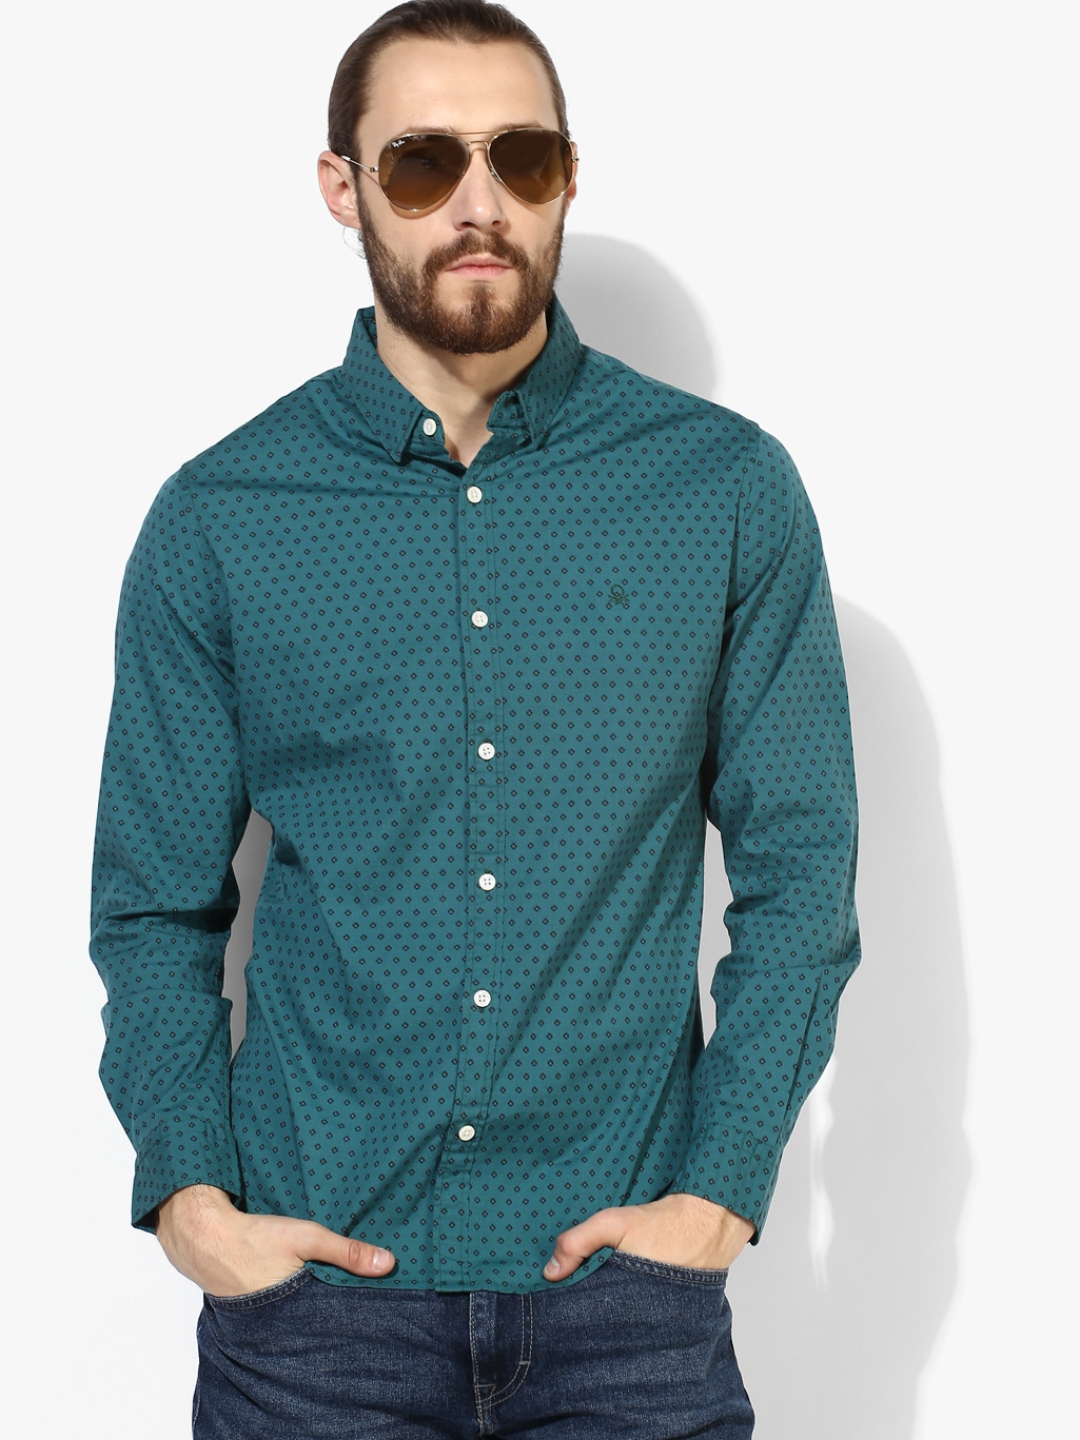 Buy Green Printed Slim Fit Casual Shirt - Shirts for Men 8227509 | Myntra